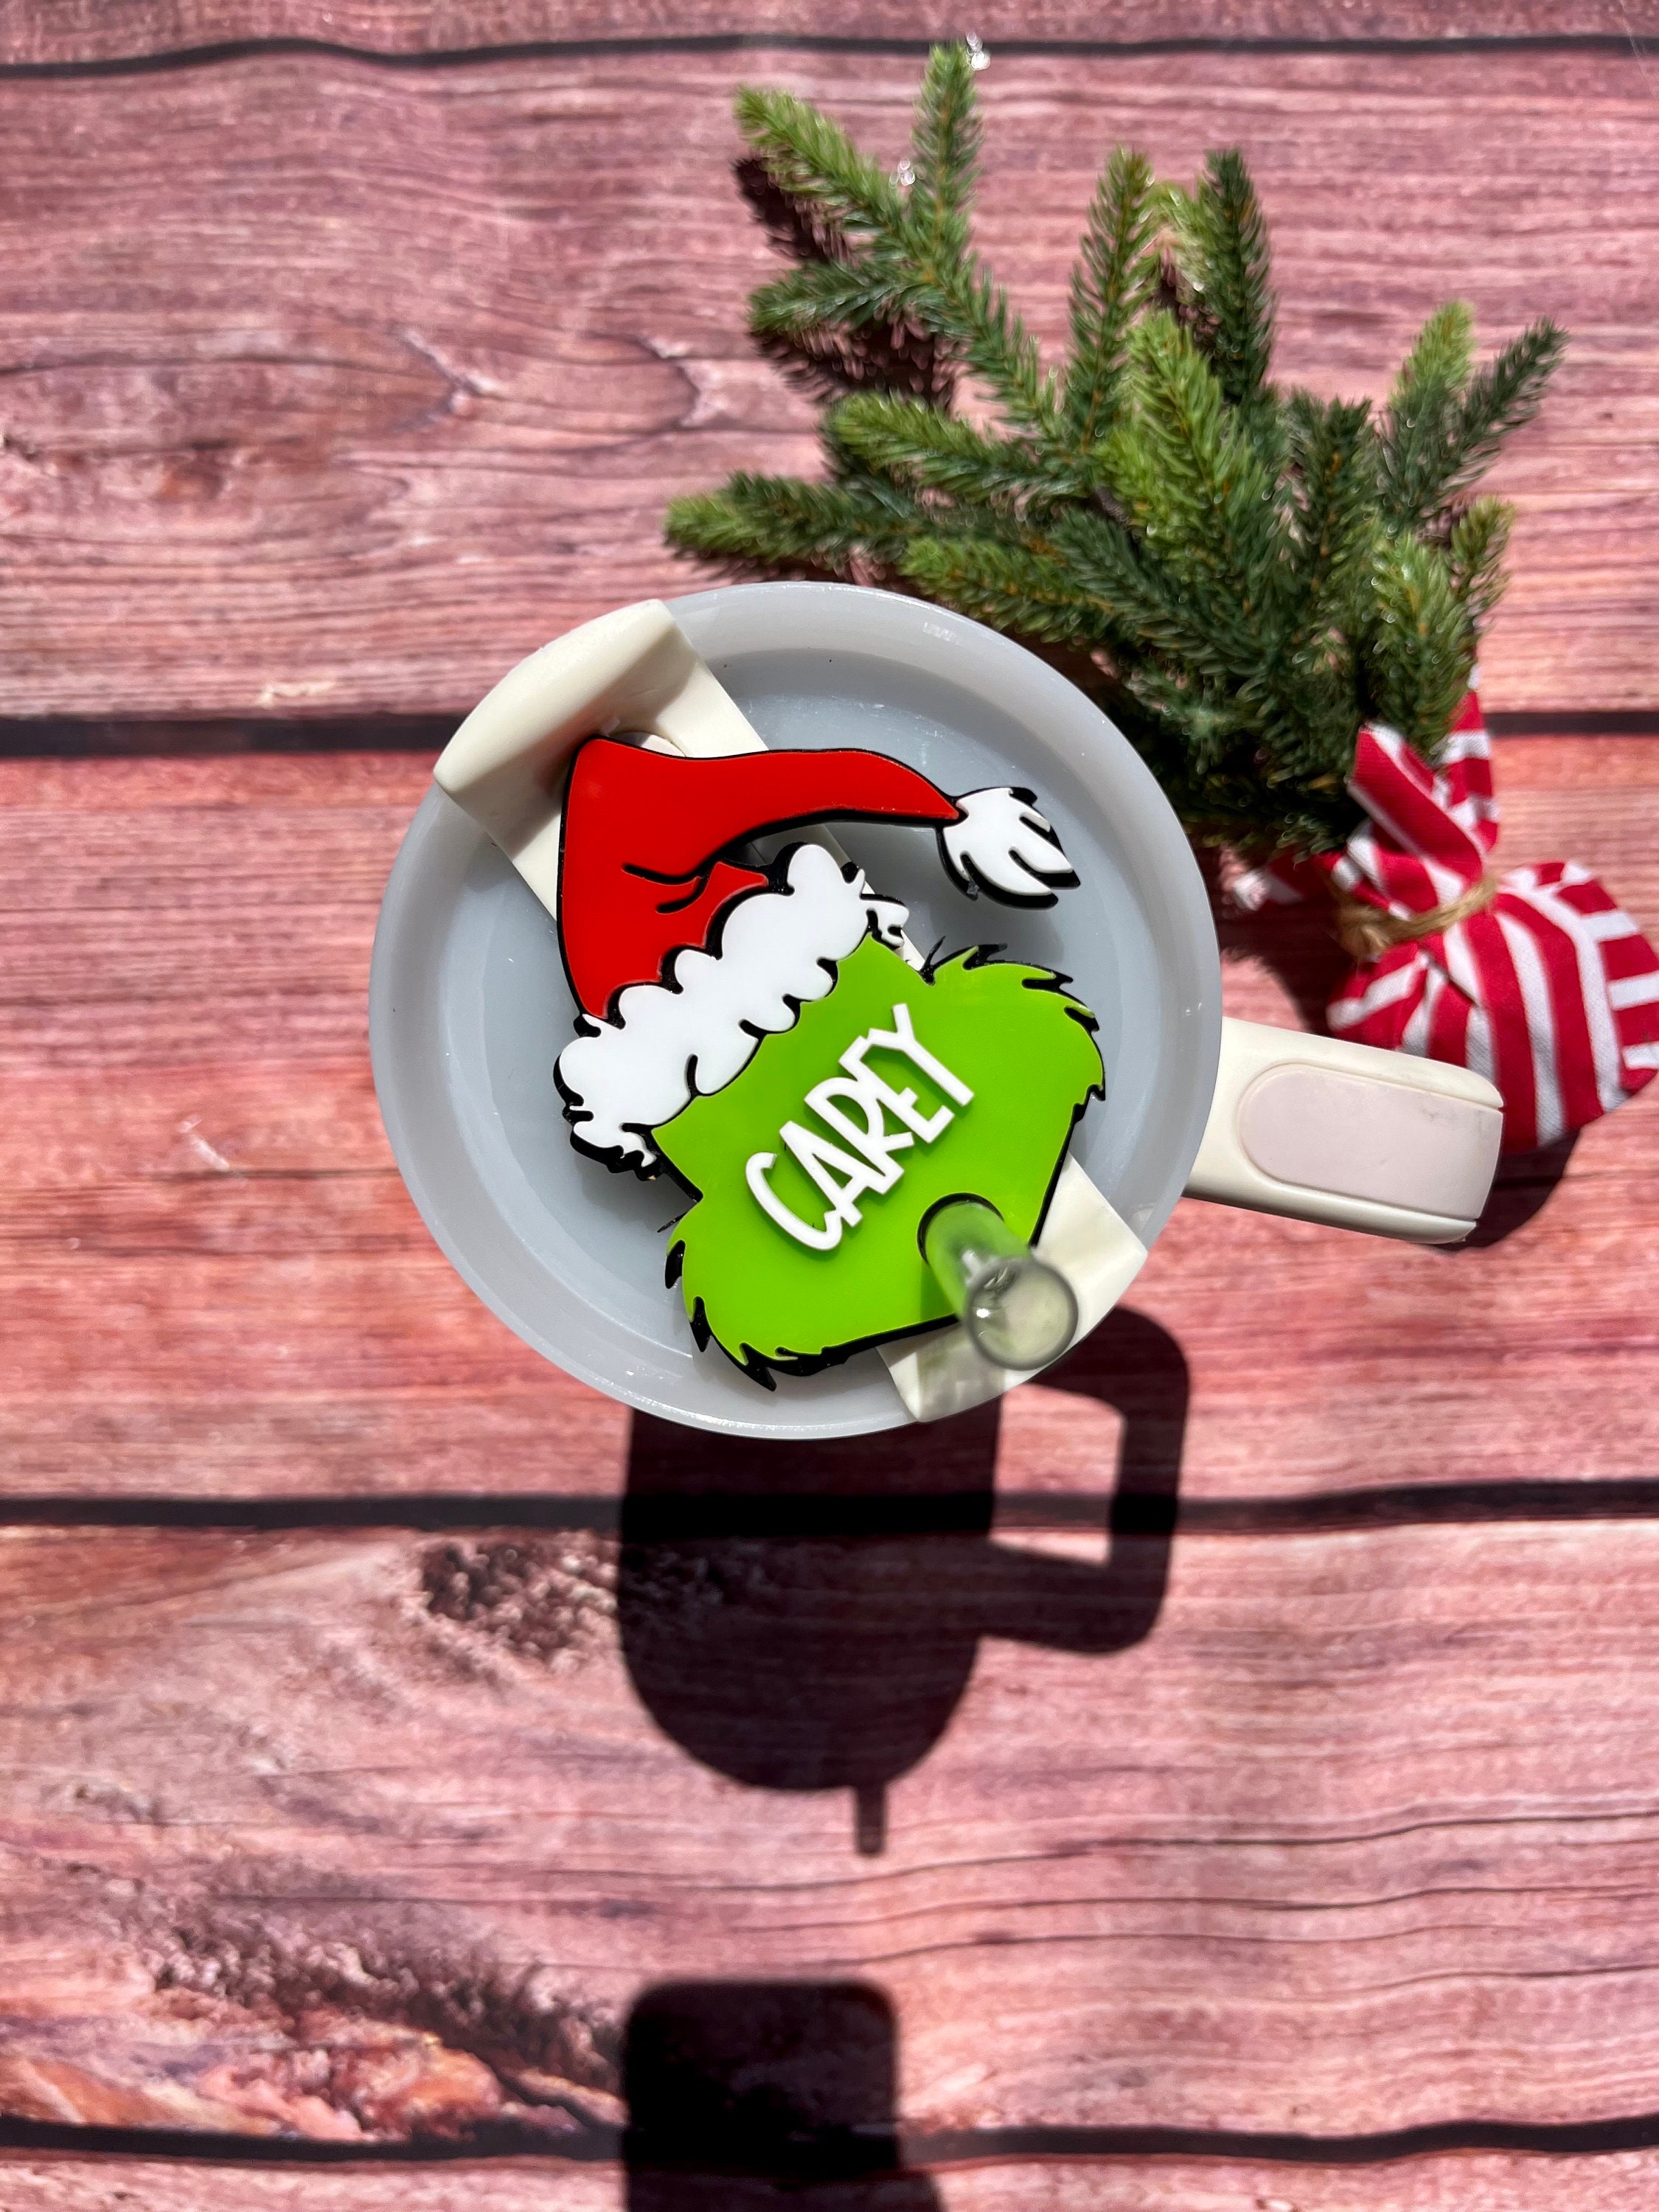 Merry Grinchmas Plastic Favor Cup, 32oz - How the Grinch Stole Christmas